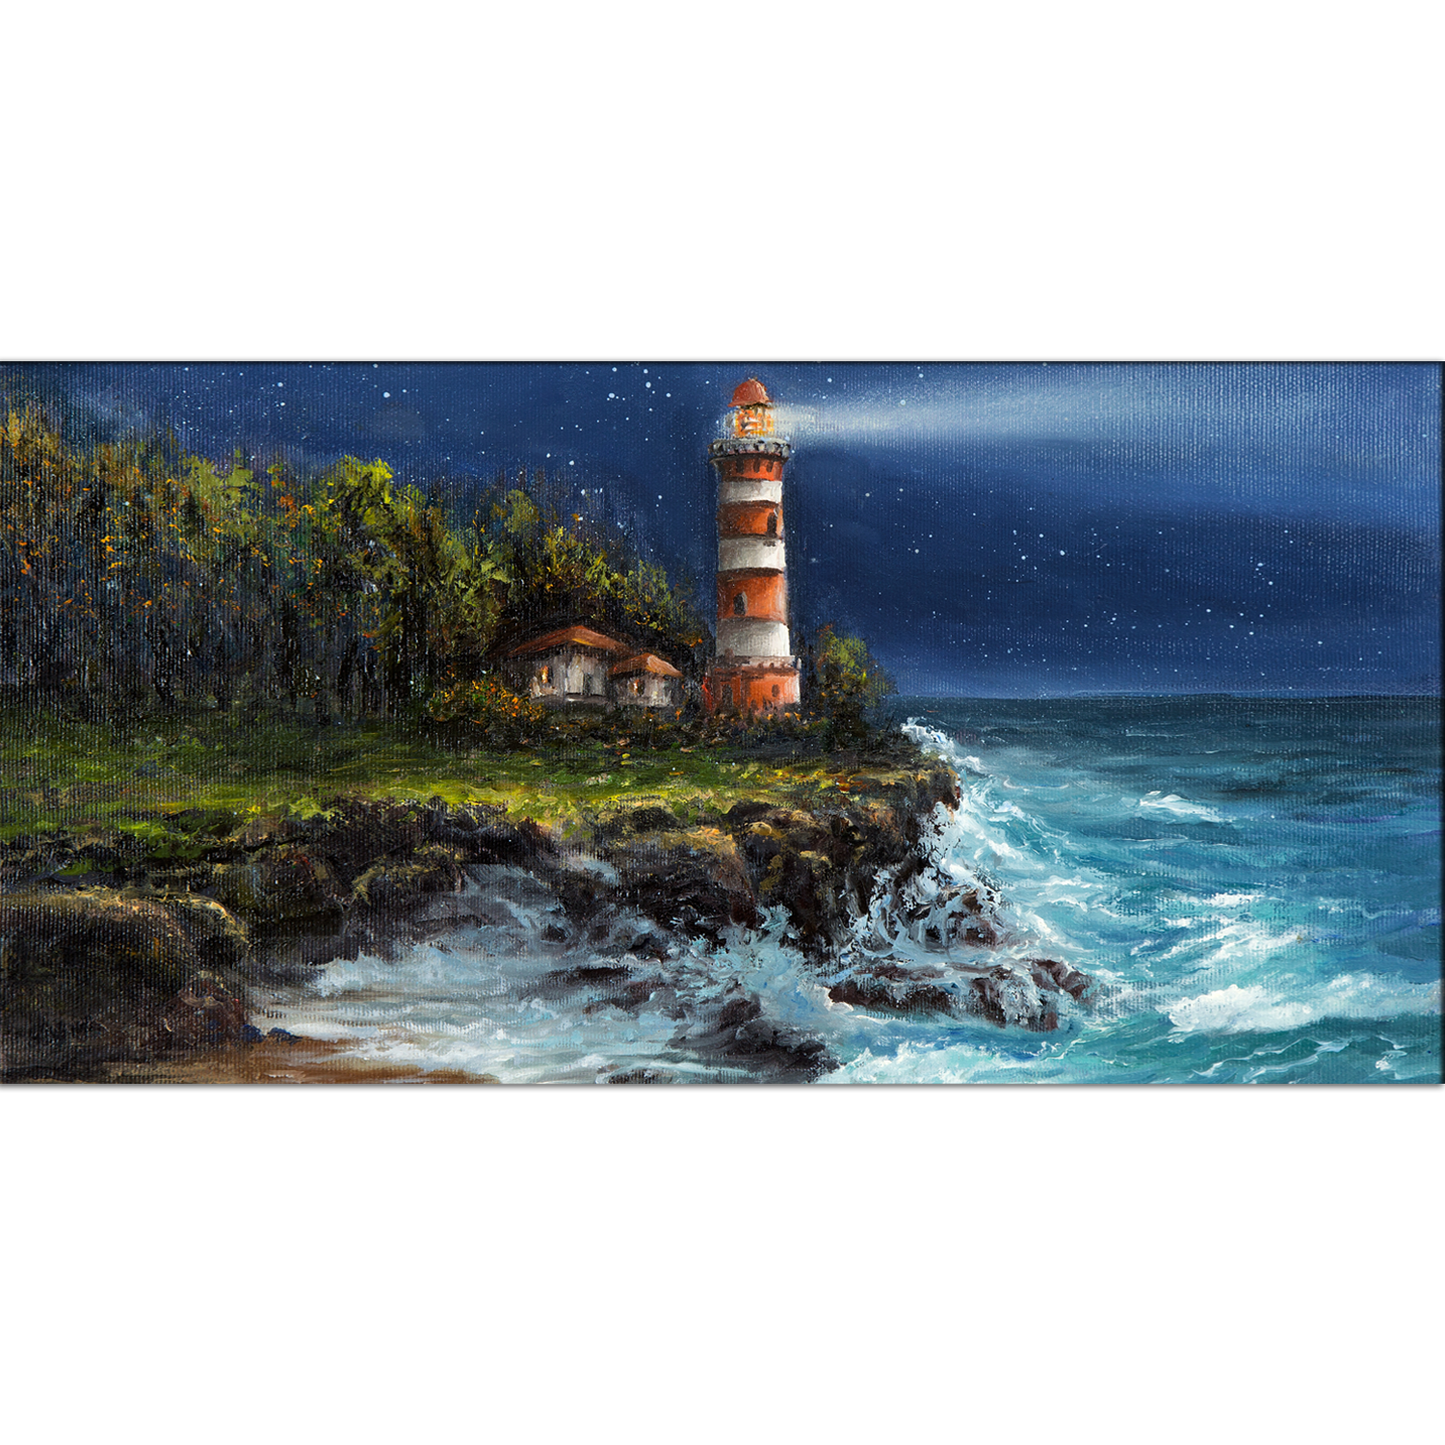 Lighthouse & Beach Modern Art Canvas Print Wall Painting